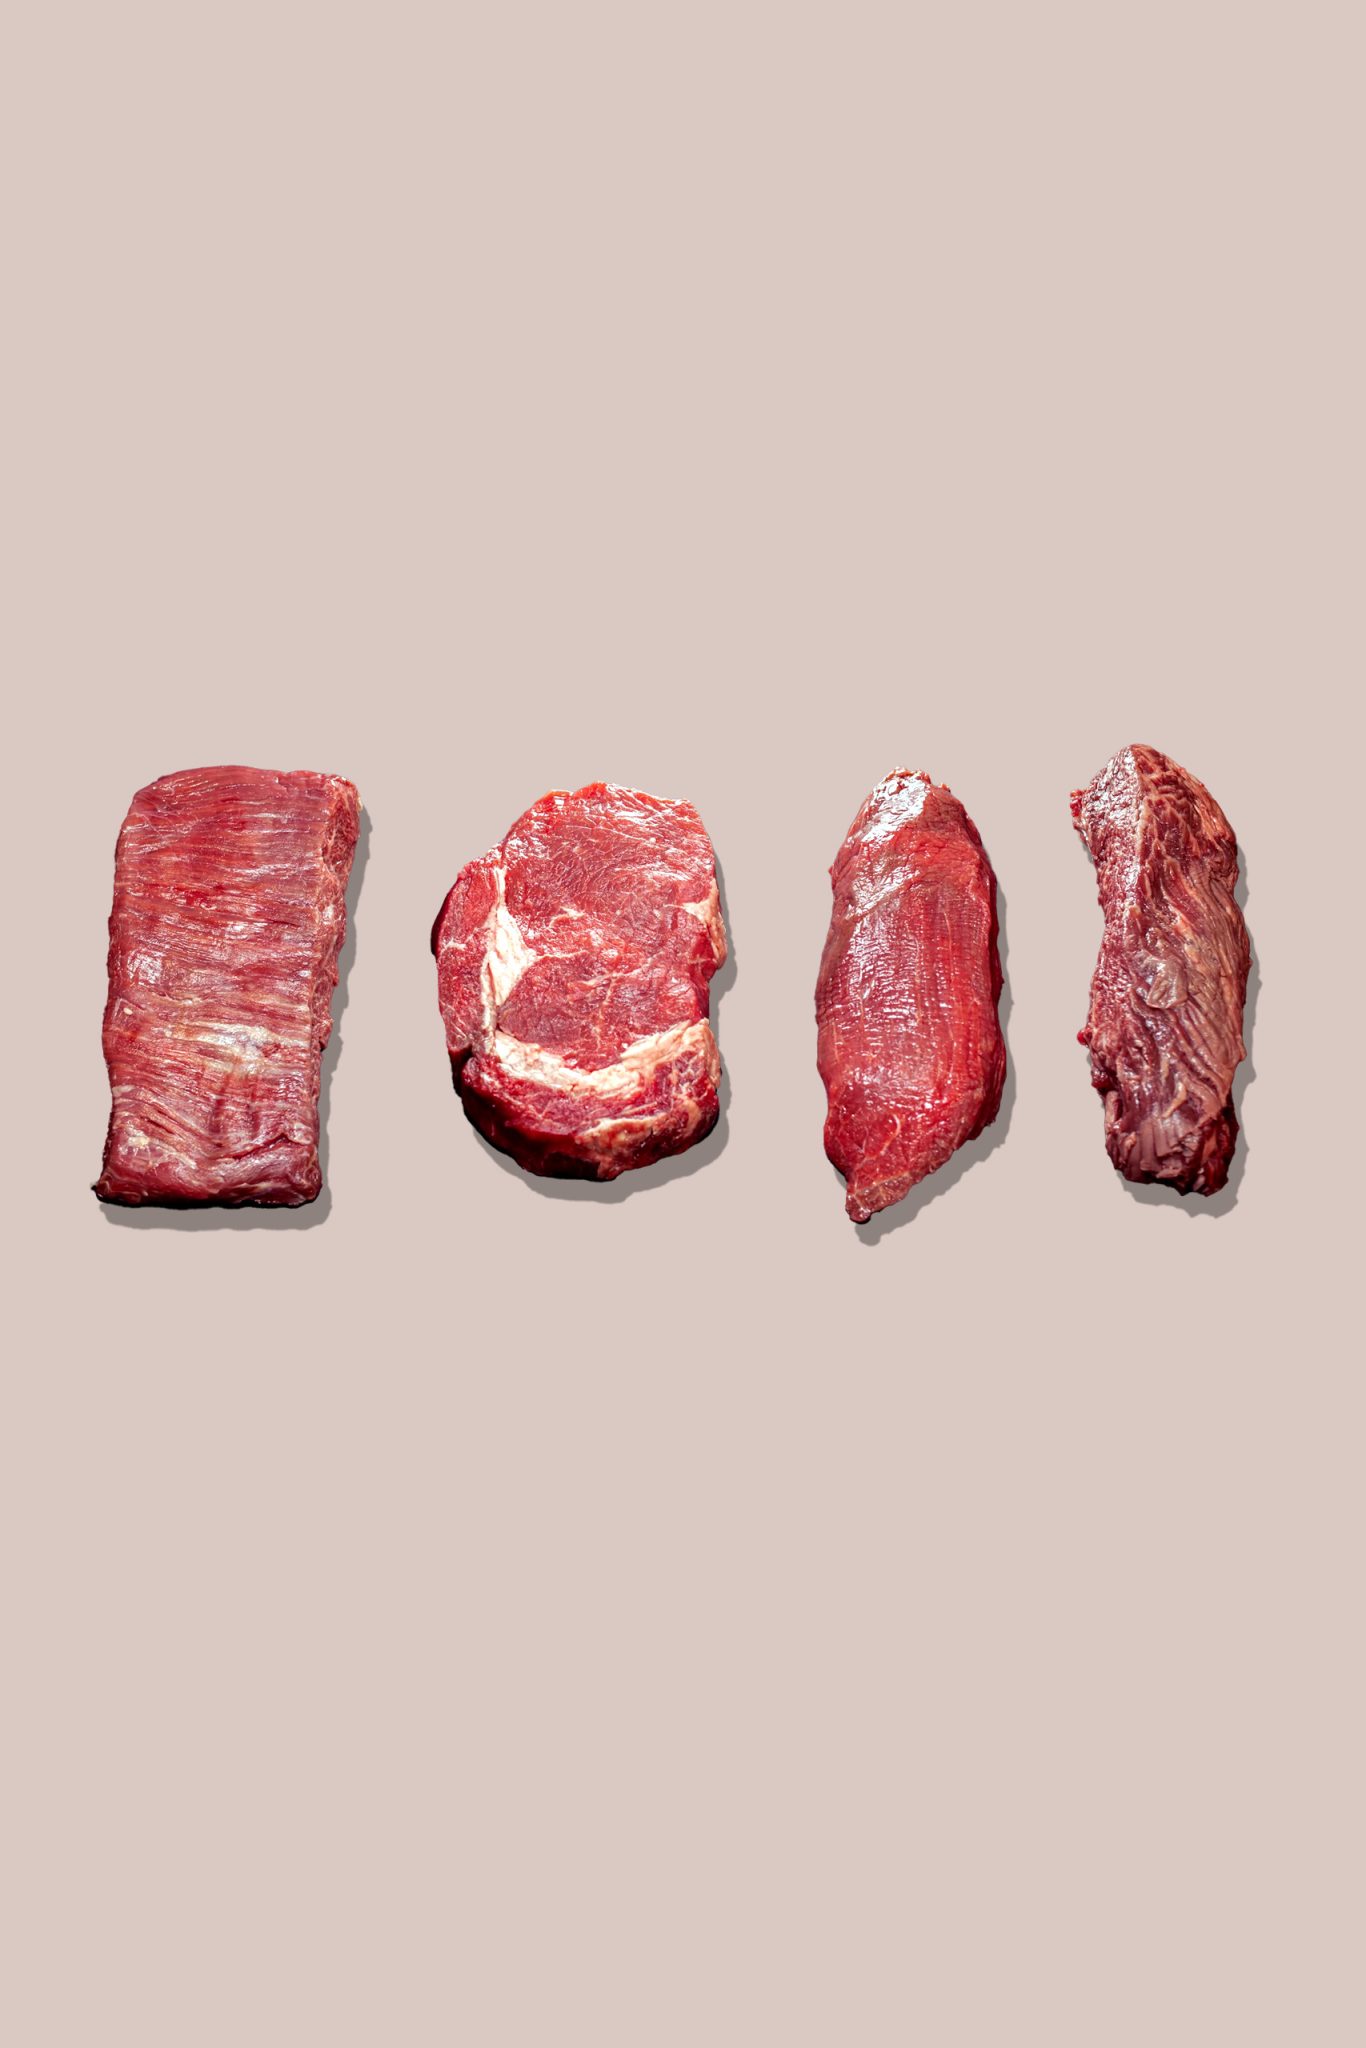 Steak for home - Probierpaket US-prime beef